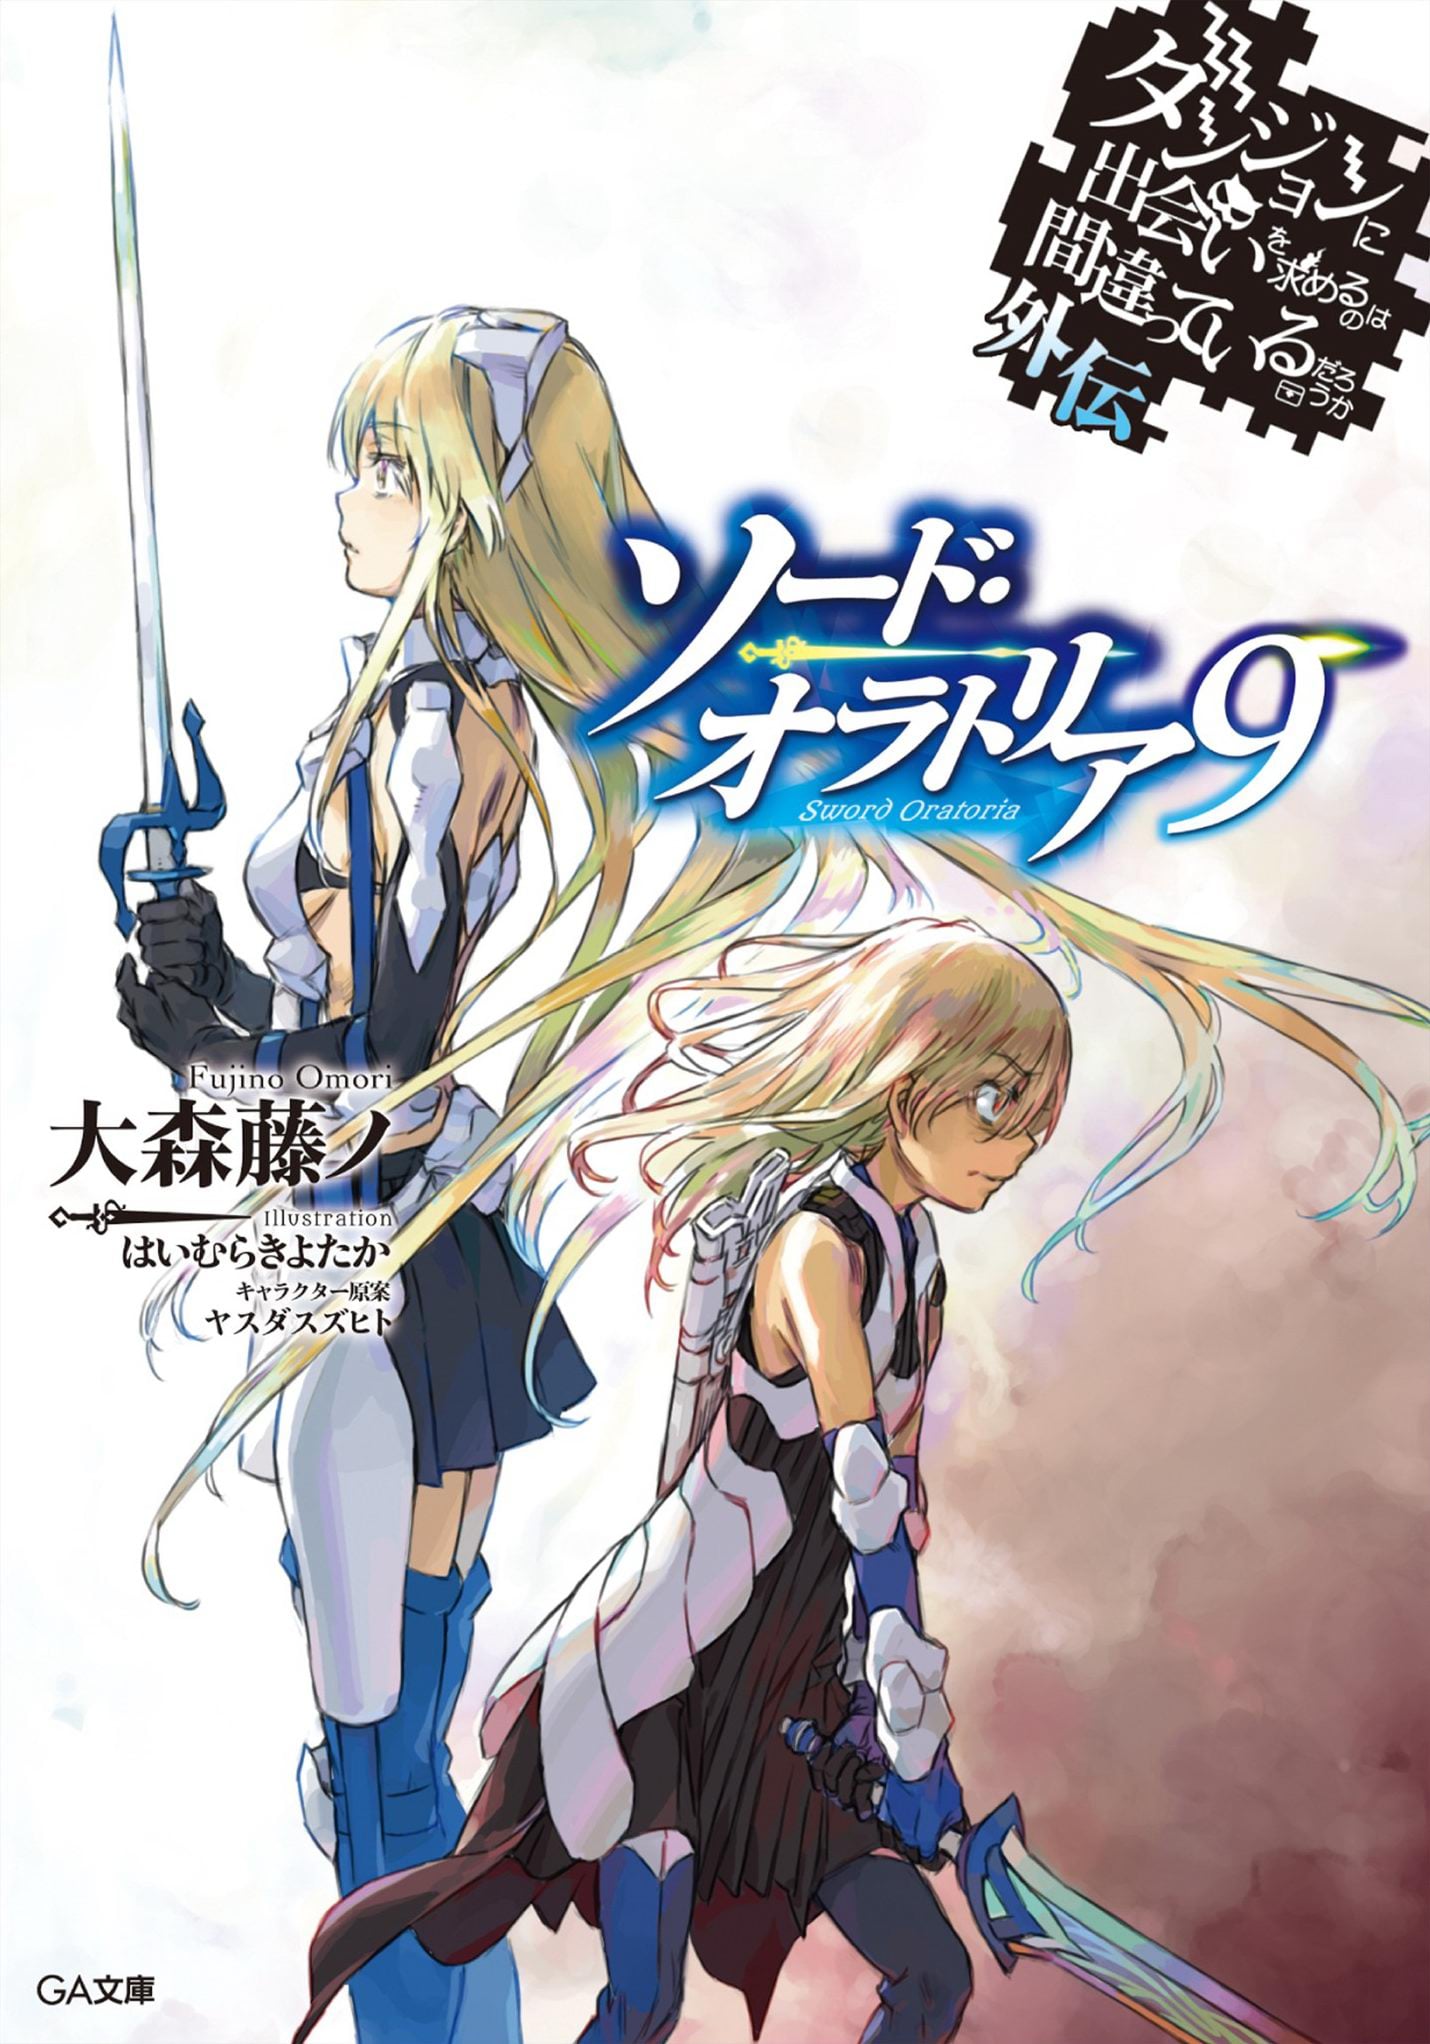 DanMachi: Sword Oratoria Gets TV Anime Series - Anime Herald